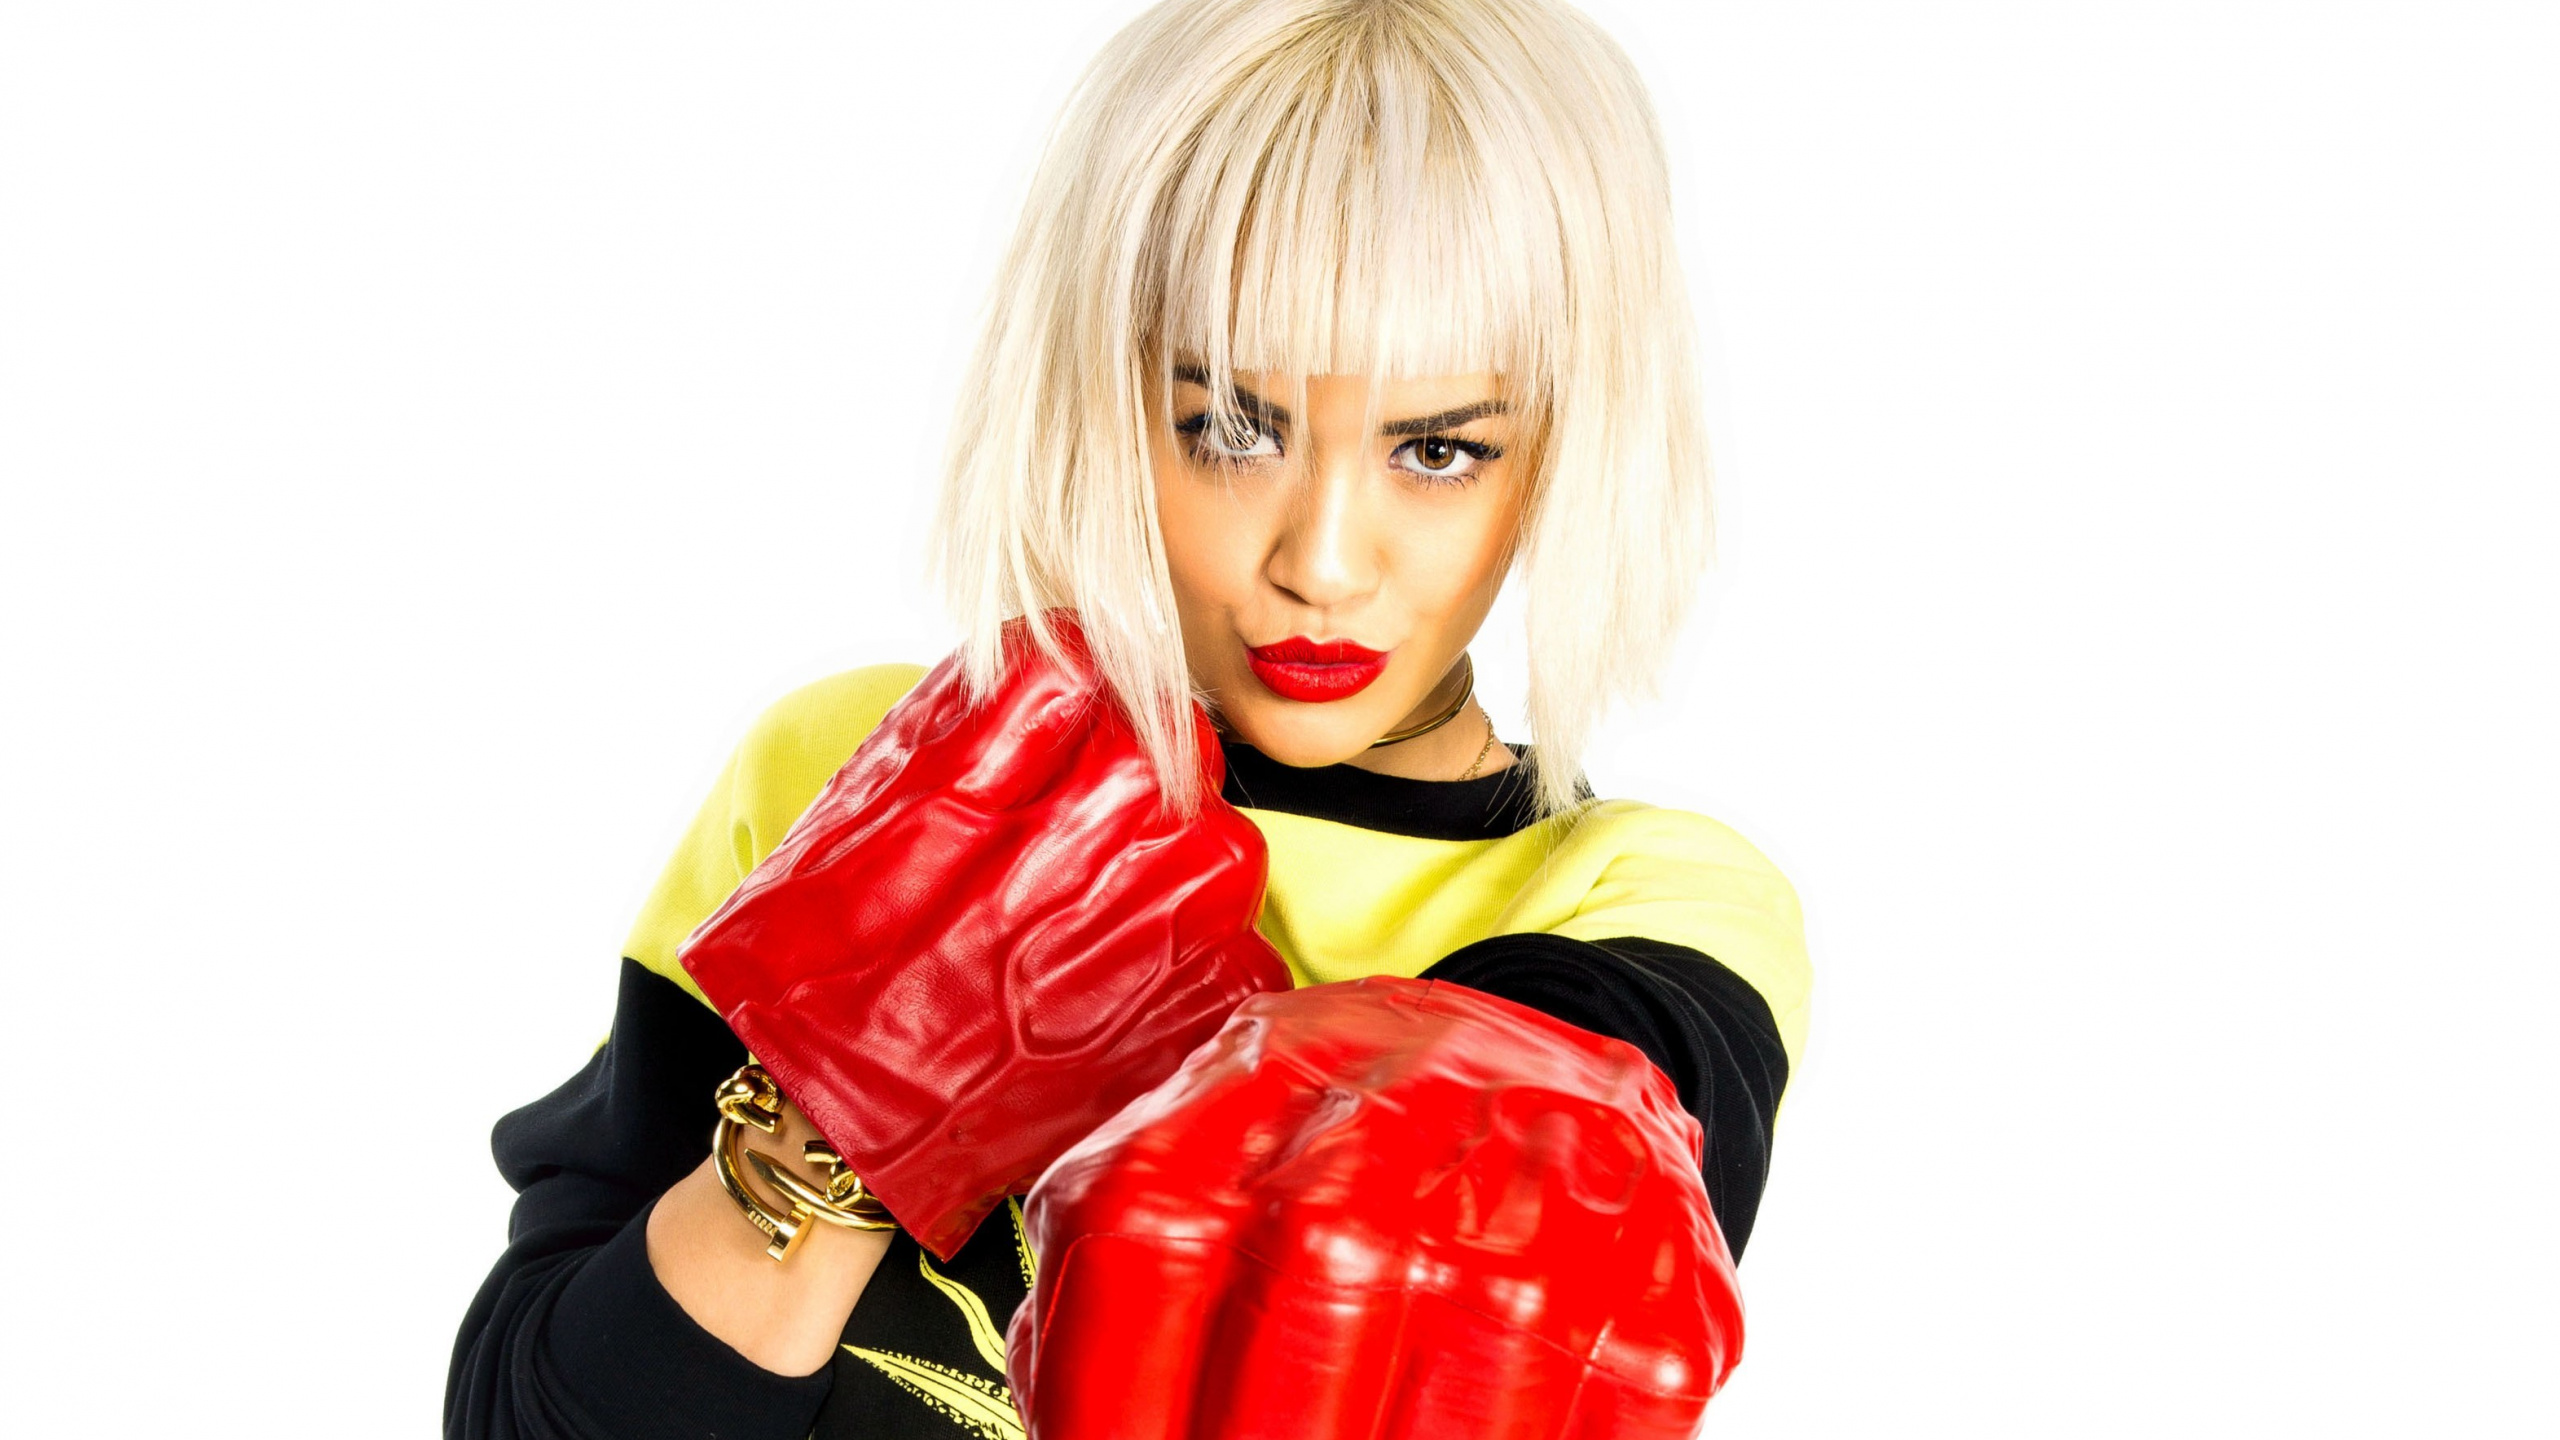 Handschuh, Rita Ora, Boxhandschuh, Boxing Equipment, Blonde. Wallpaper in 2560x1440 Resolution